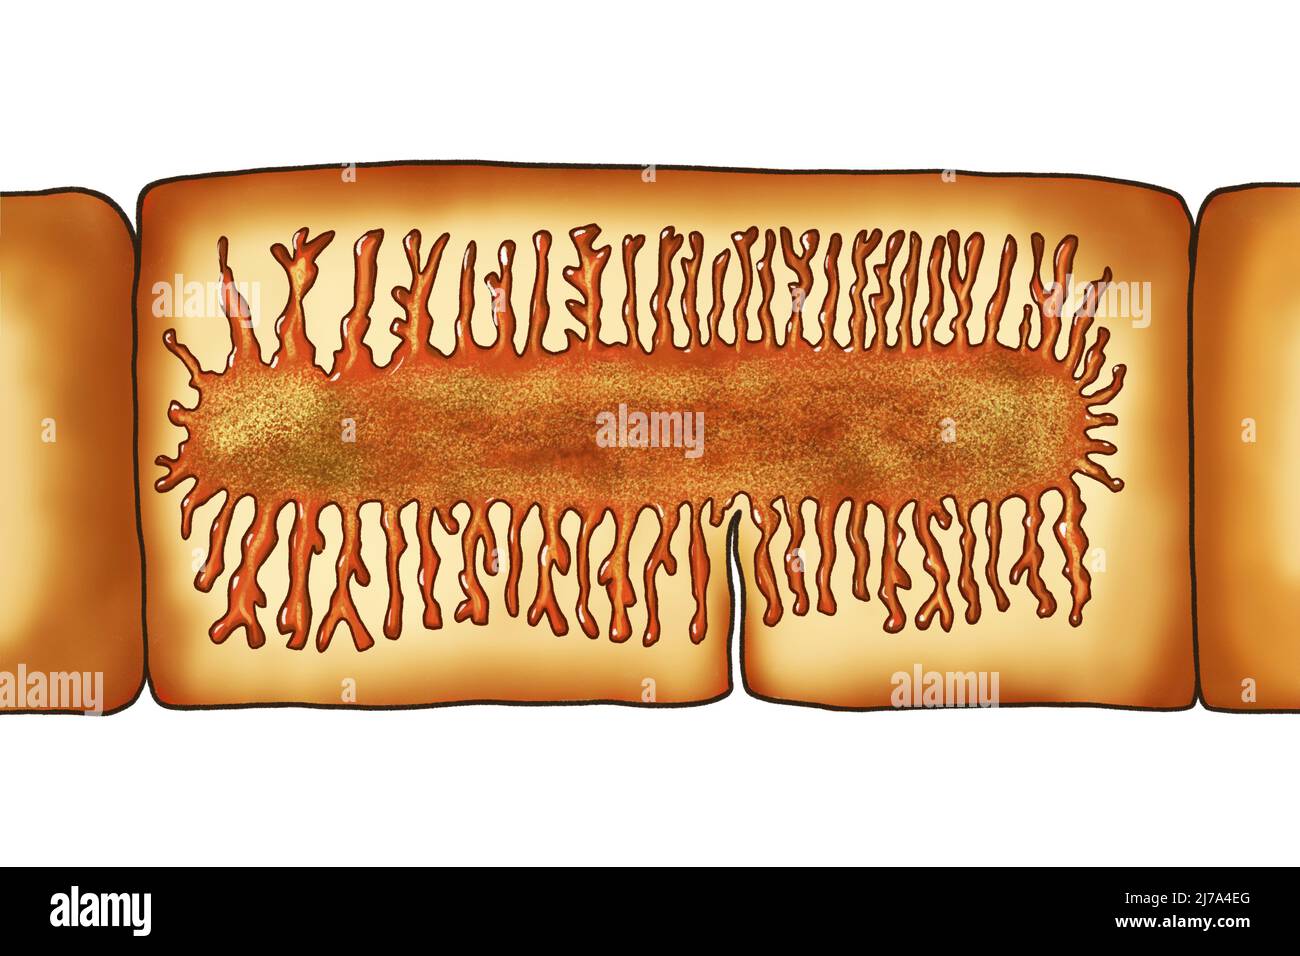 Proglottid of a beef tapeworm, illustration Stock Photo